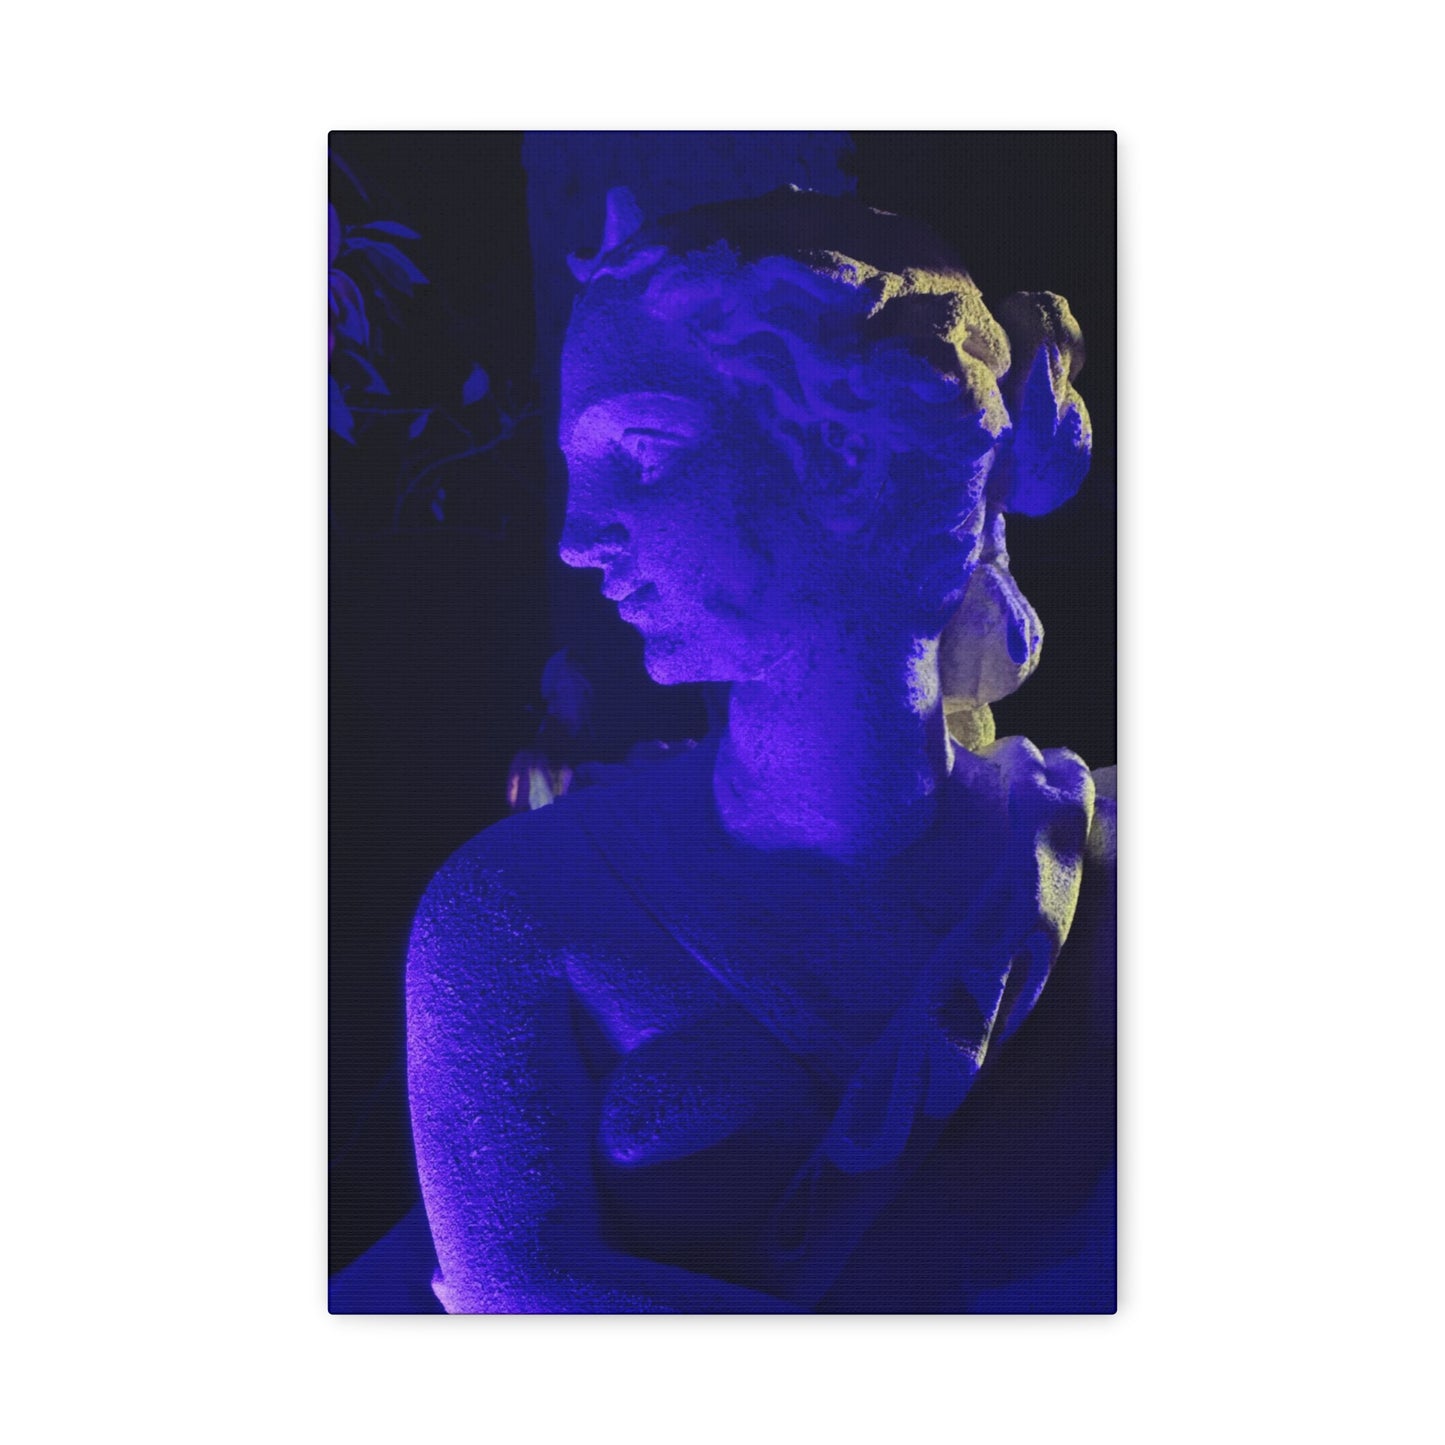 Female Statue in Purple Light - Canvas Print